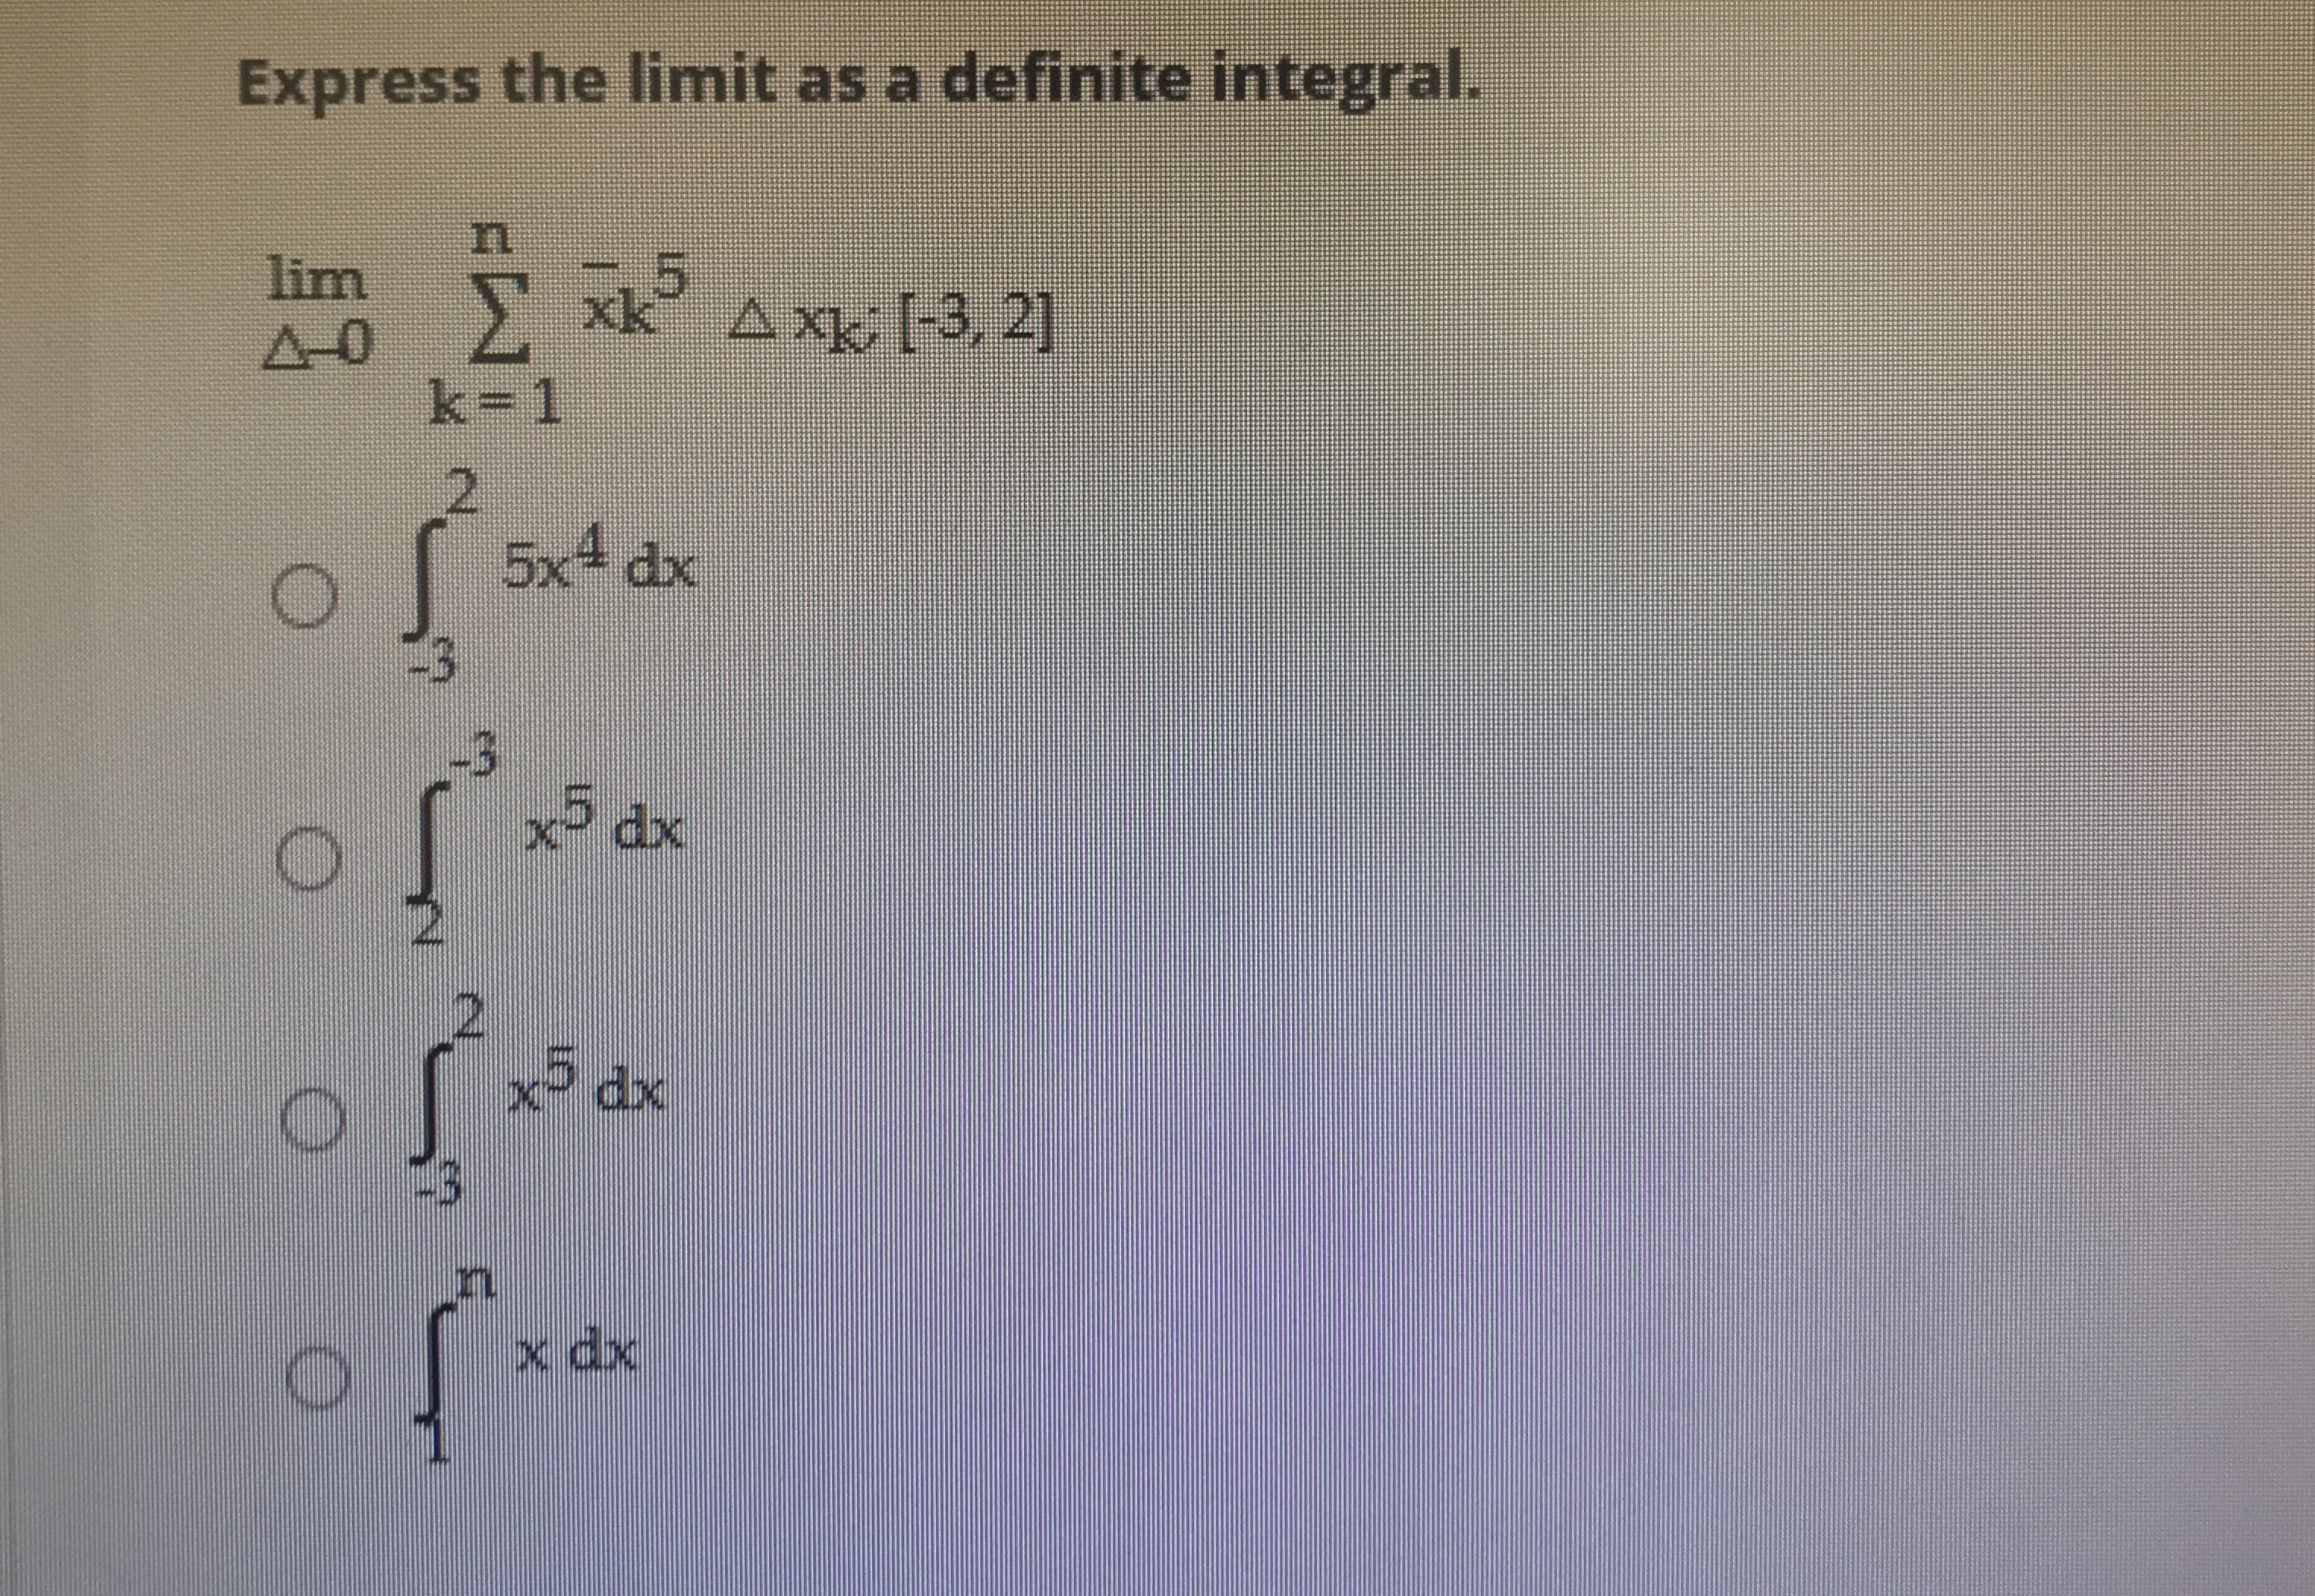 Express the limit as a definite integral.
lim
xk Ax [-3, 2]
4-0
k 1
